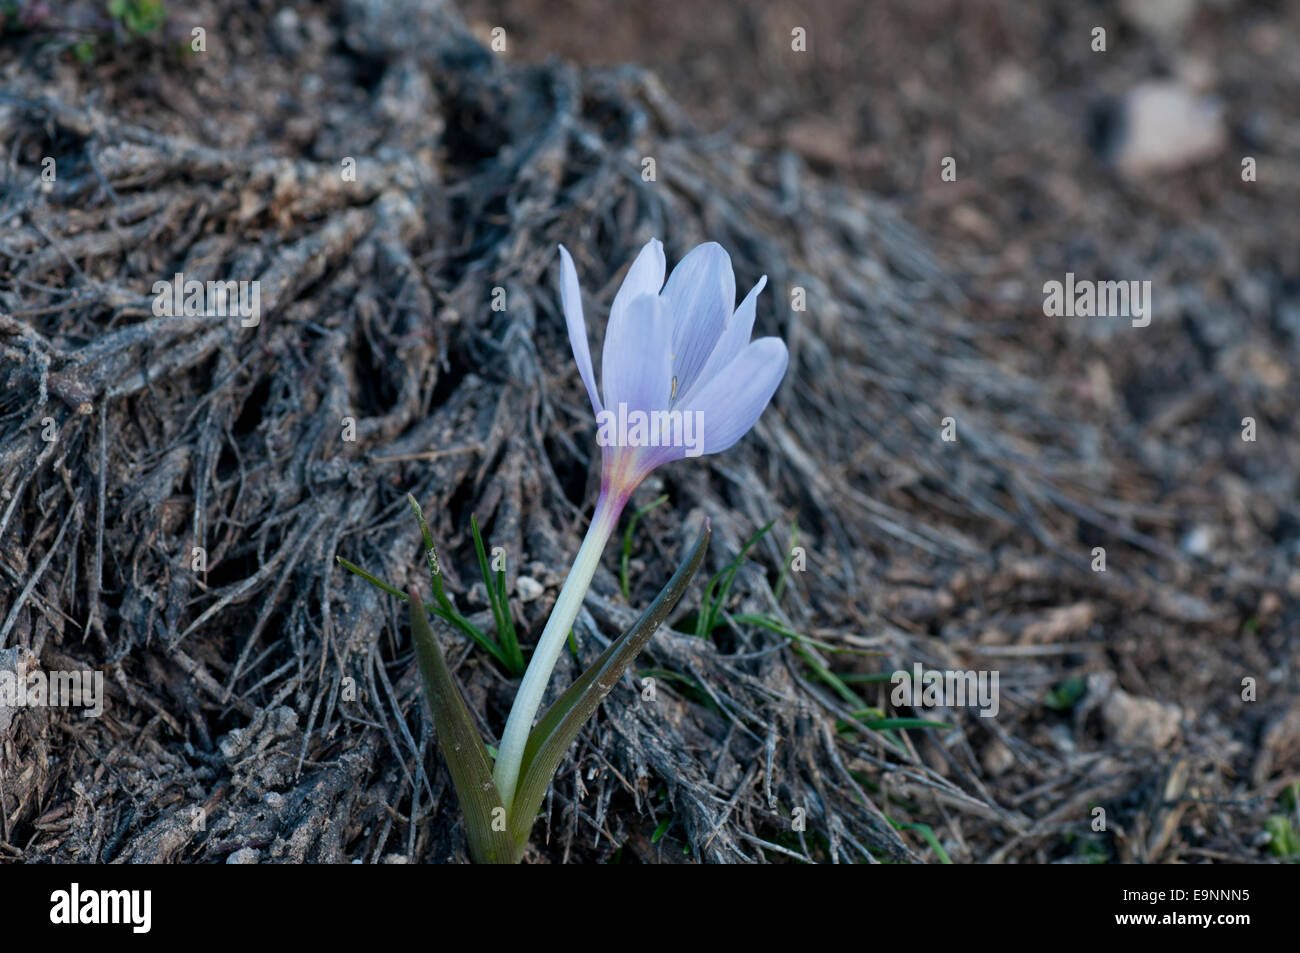 Shot taken at dusk of a single flower of Colchicum szovitsii found in snow melt at Ercives, Turkey Stock Photo